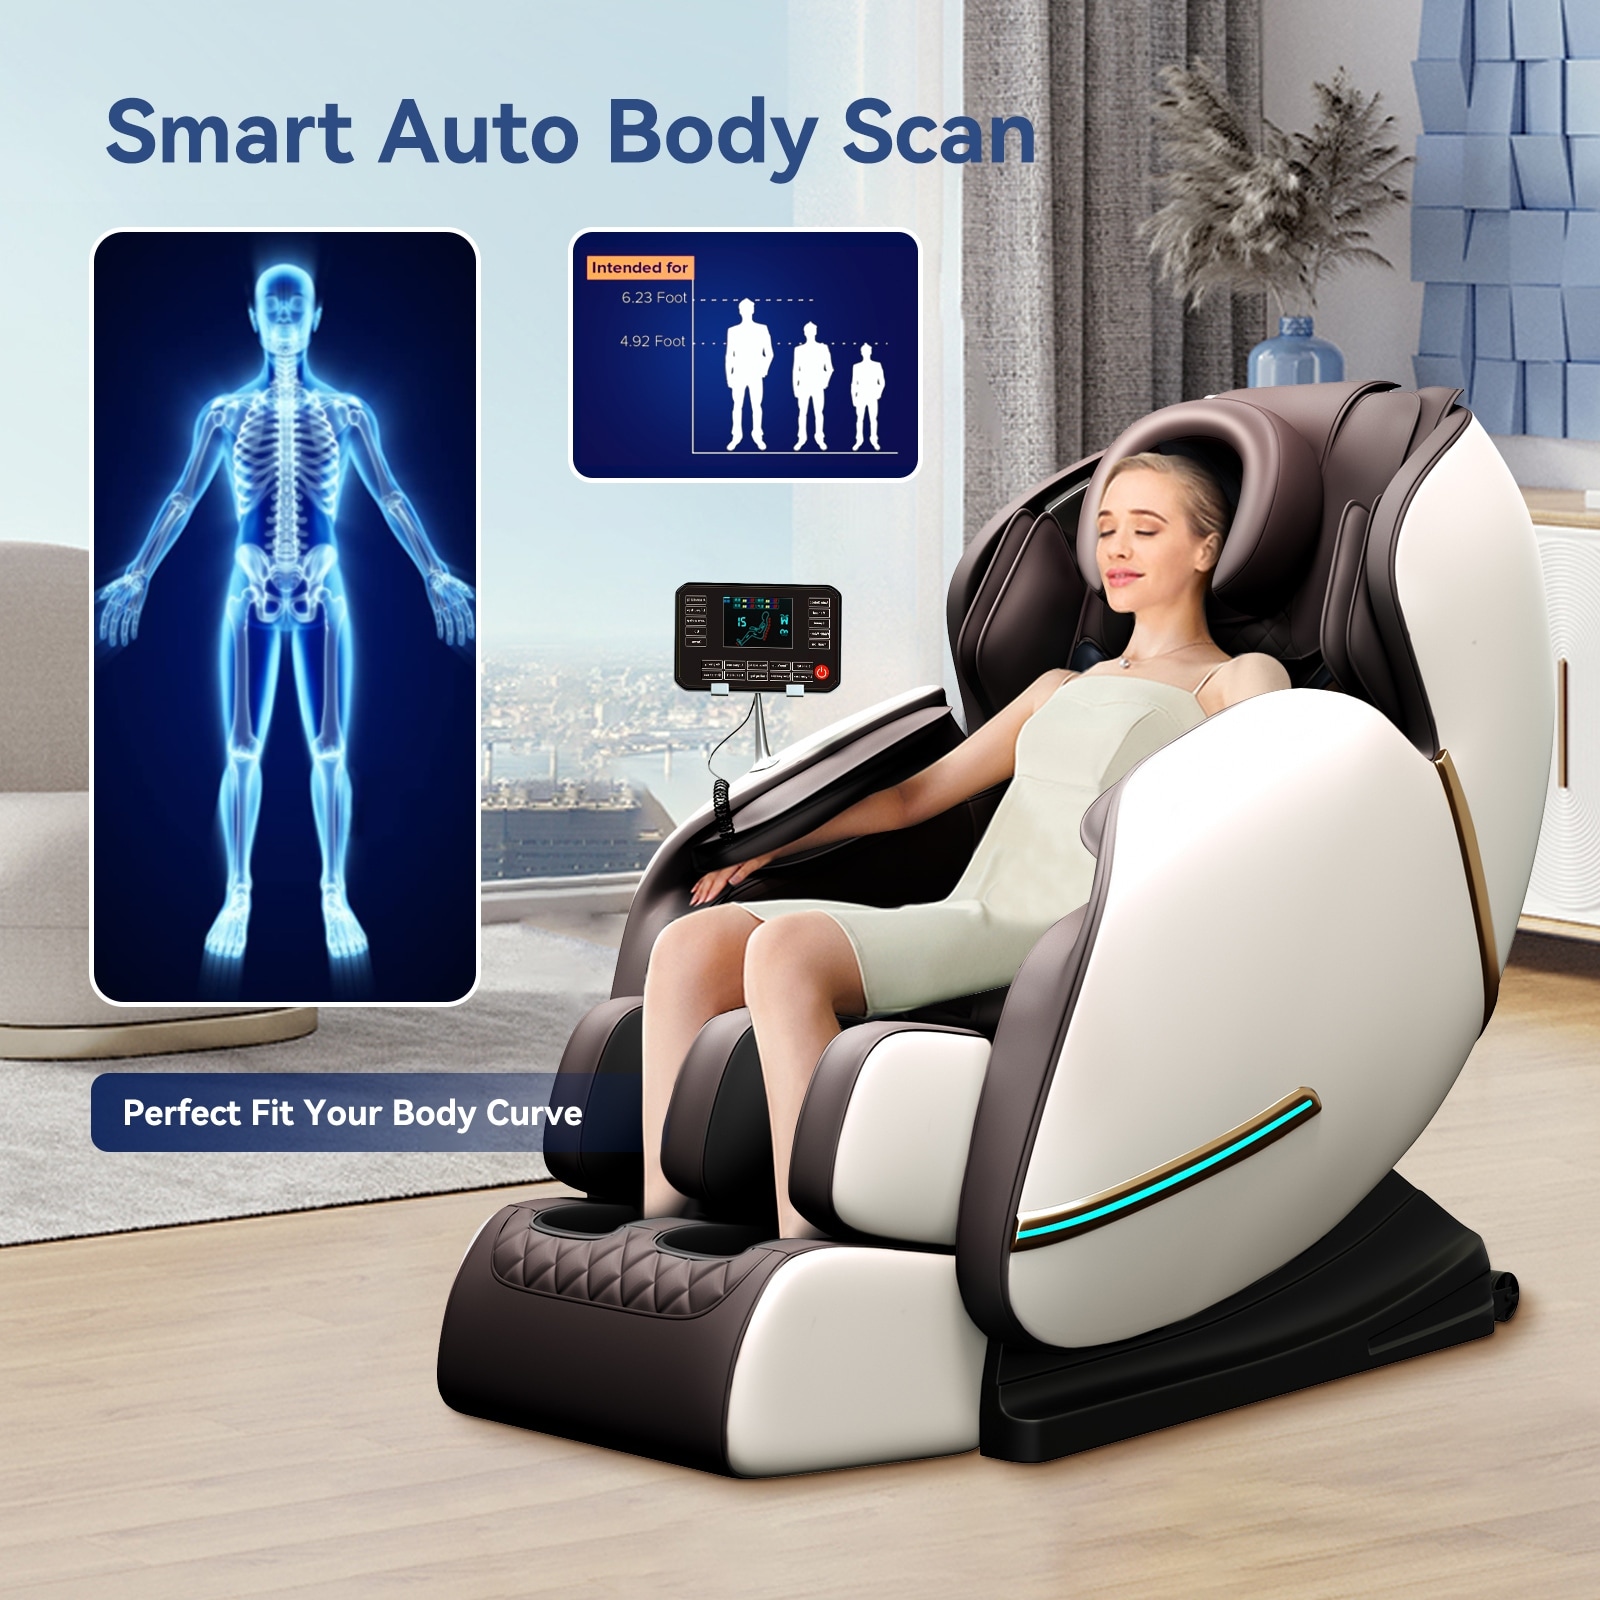 Bestmassage 4D Massage Chair,Full Body Zero Gravity Recliner Chair with Smart Large Screen Bluetooth Heat Foot Roller,Black